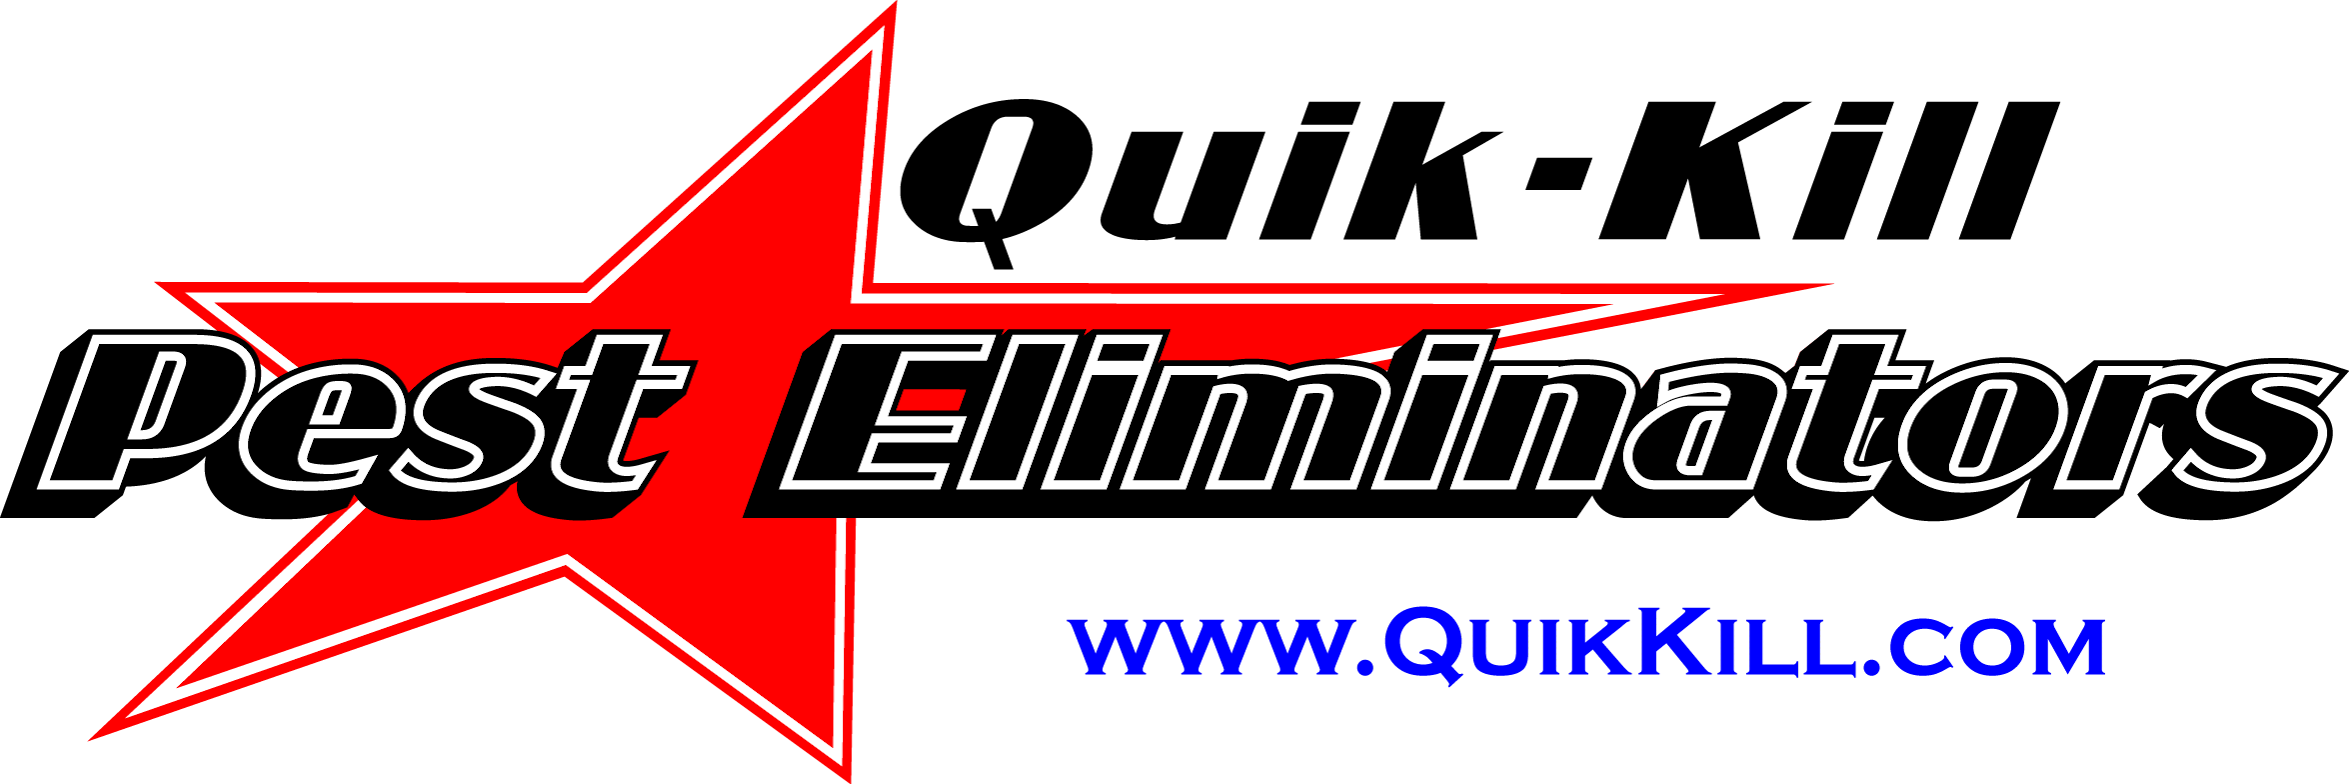 Quik-Kill Pest Eliminators, Inc. Logo